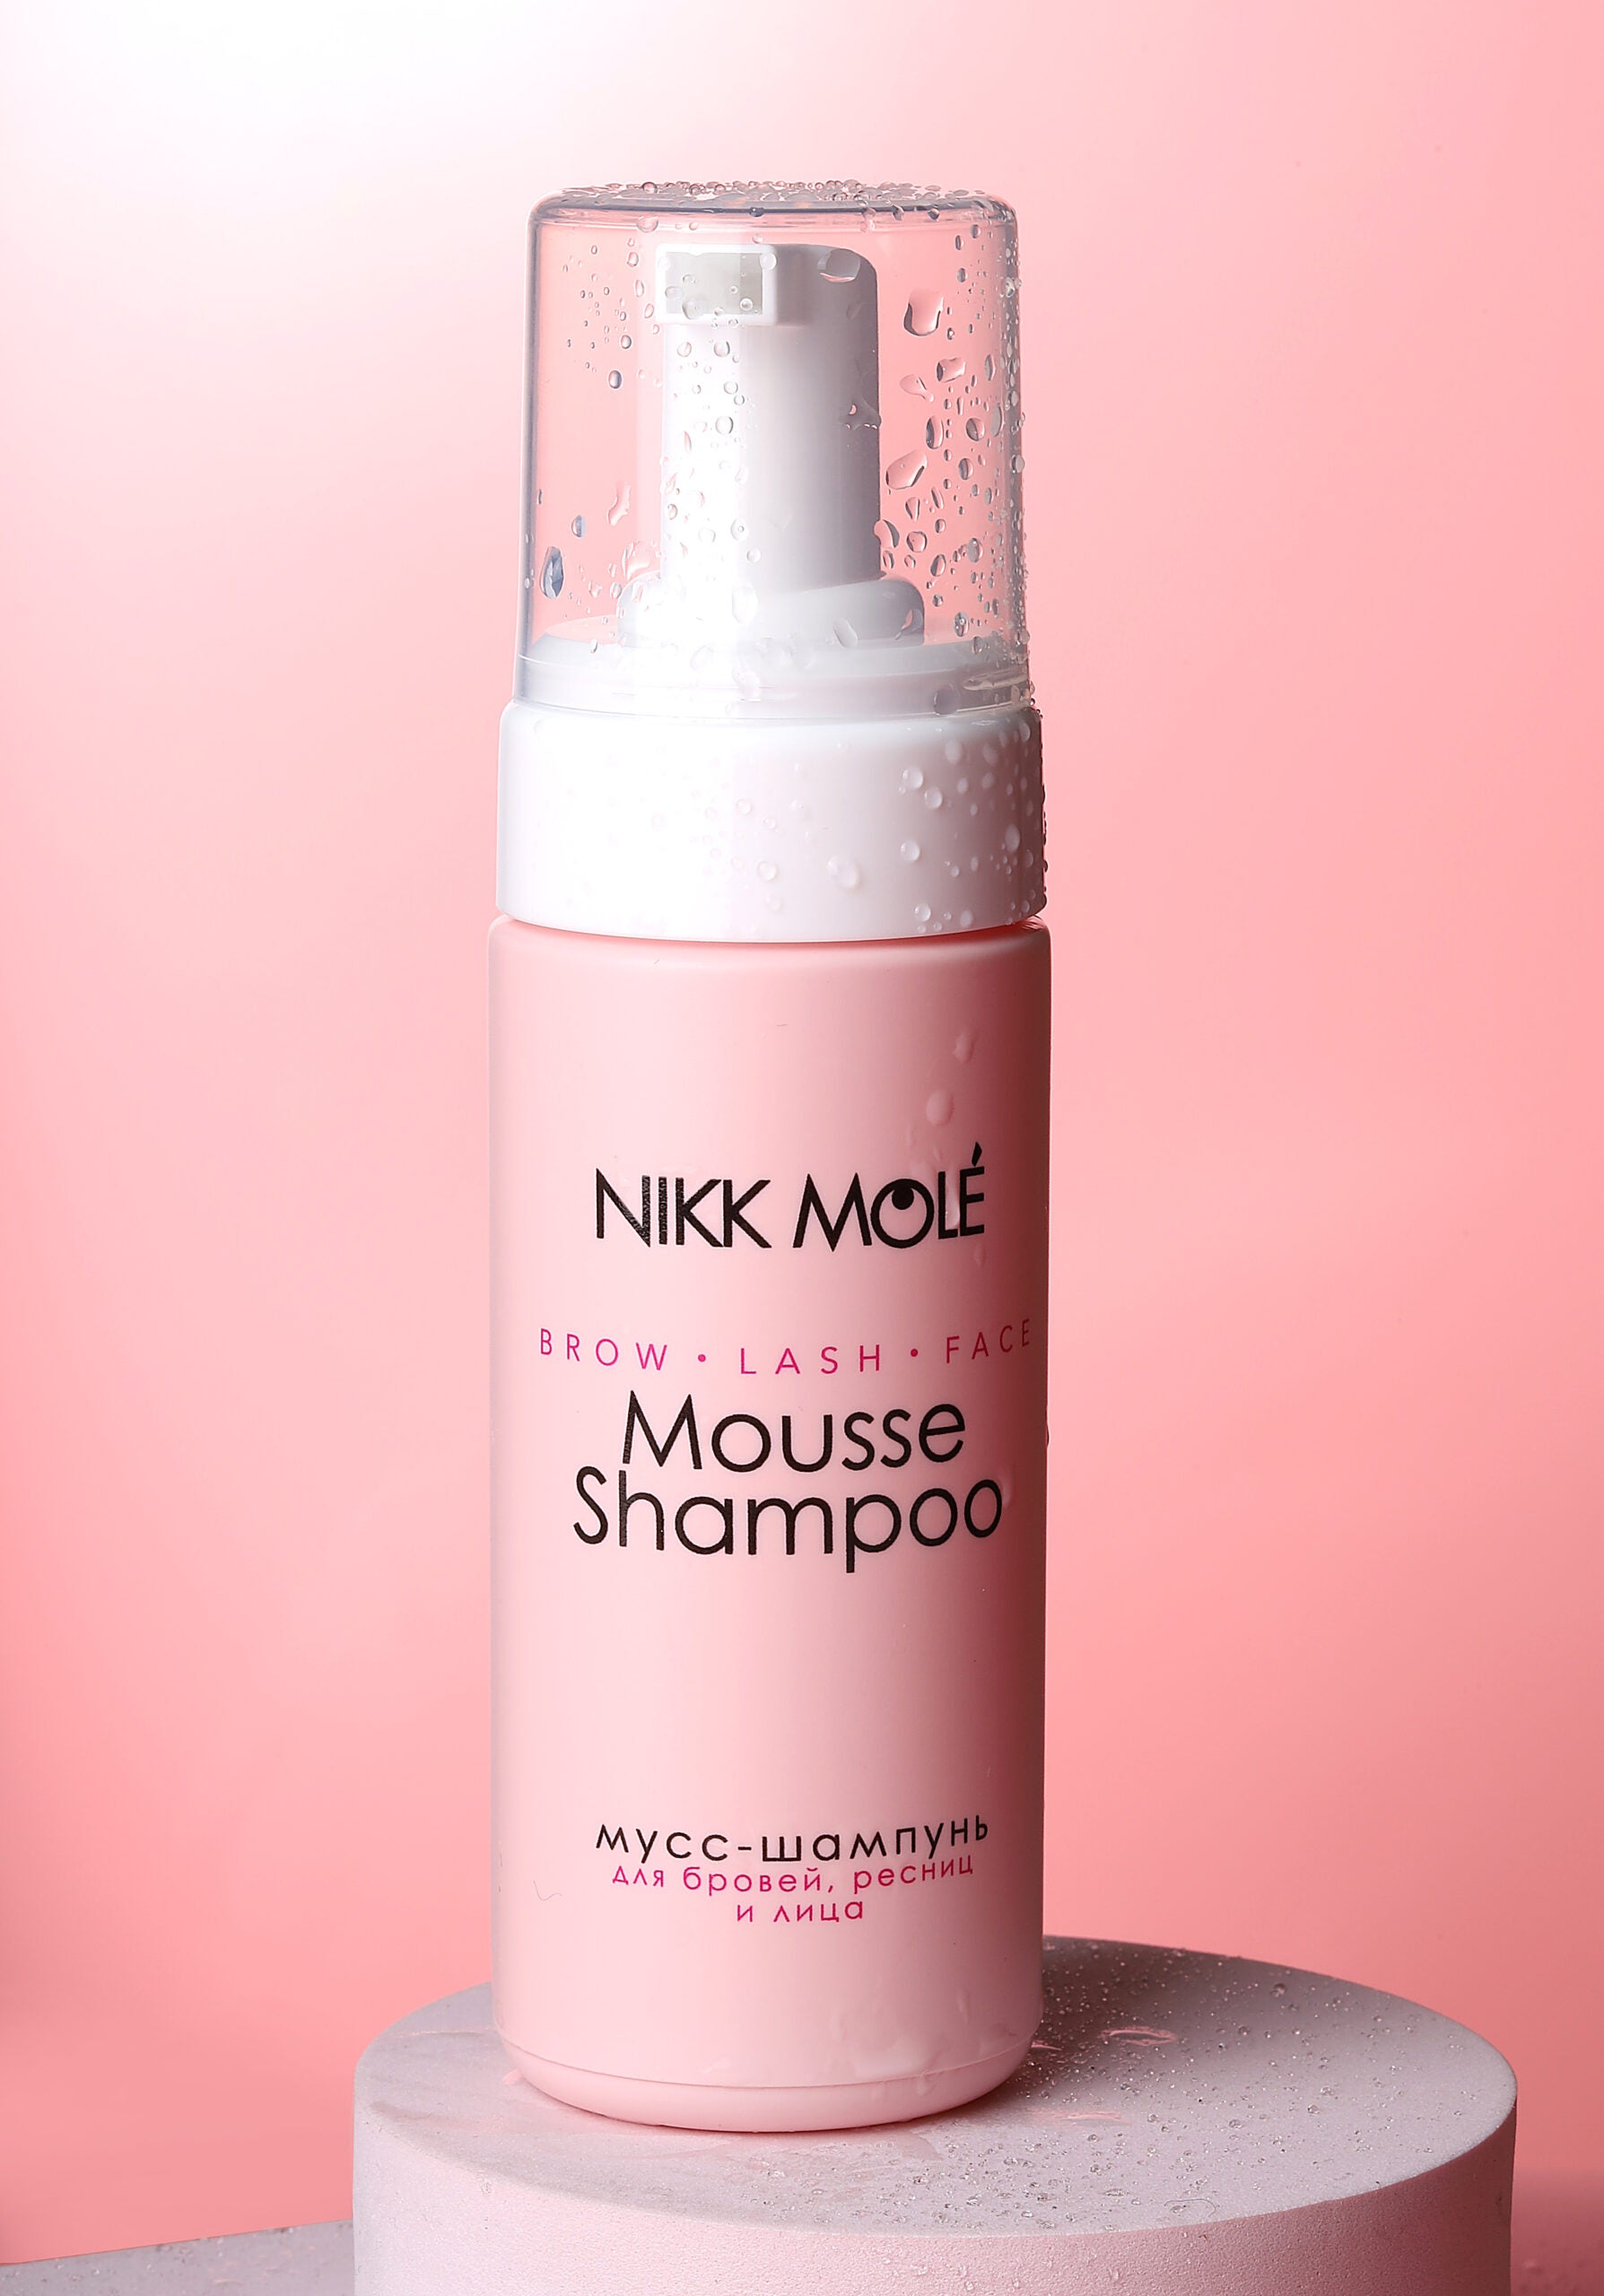 NIKK MOLÉ - Mousse Shampoo (125ML)